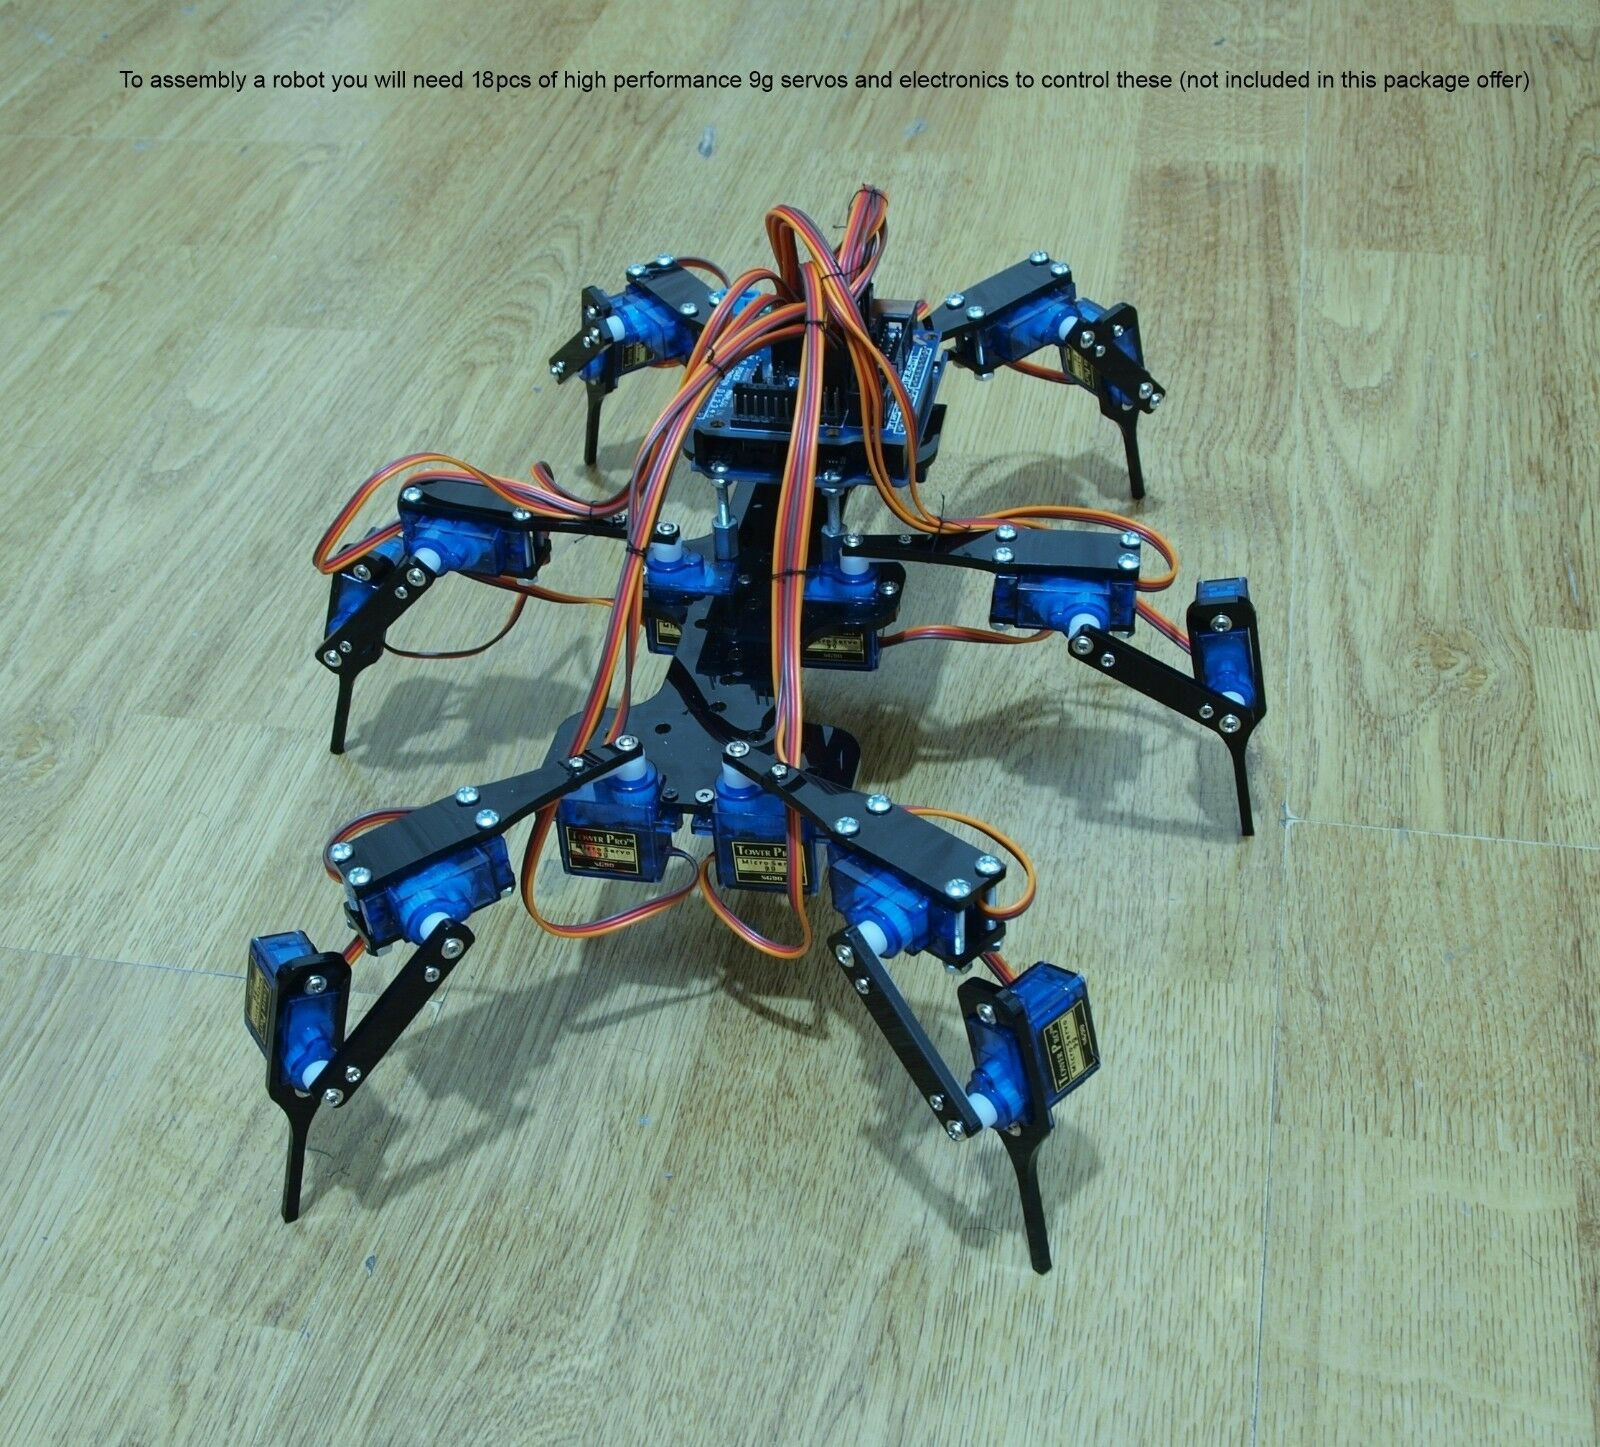 Best ideas about DIY Robot Kit
. Save or Pin Six Feet Robot Hexapod Mini "Spider" Arduino DIY Robot KIT Now.